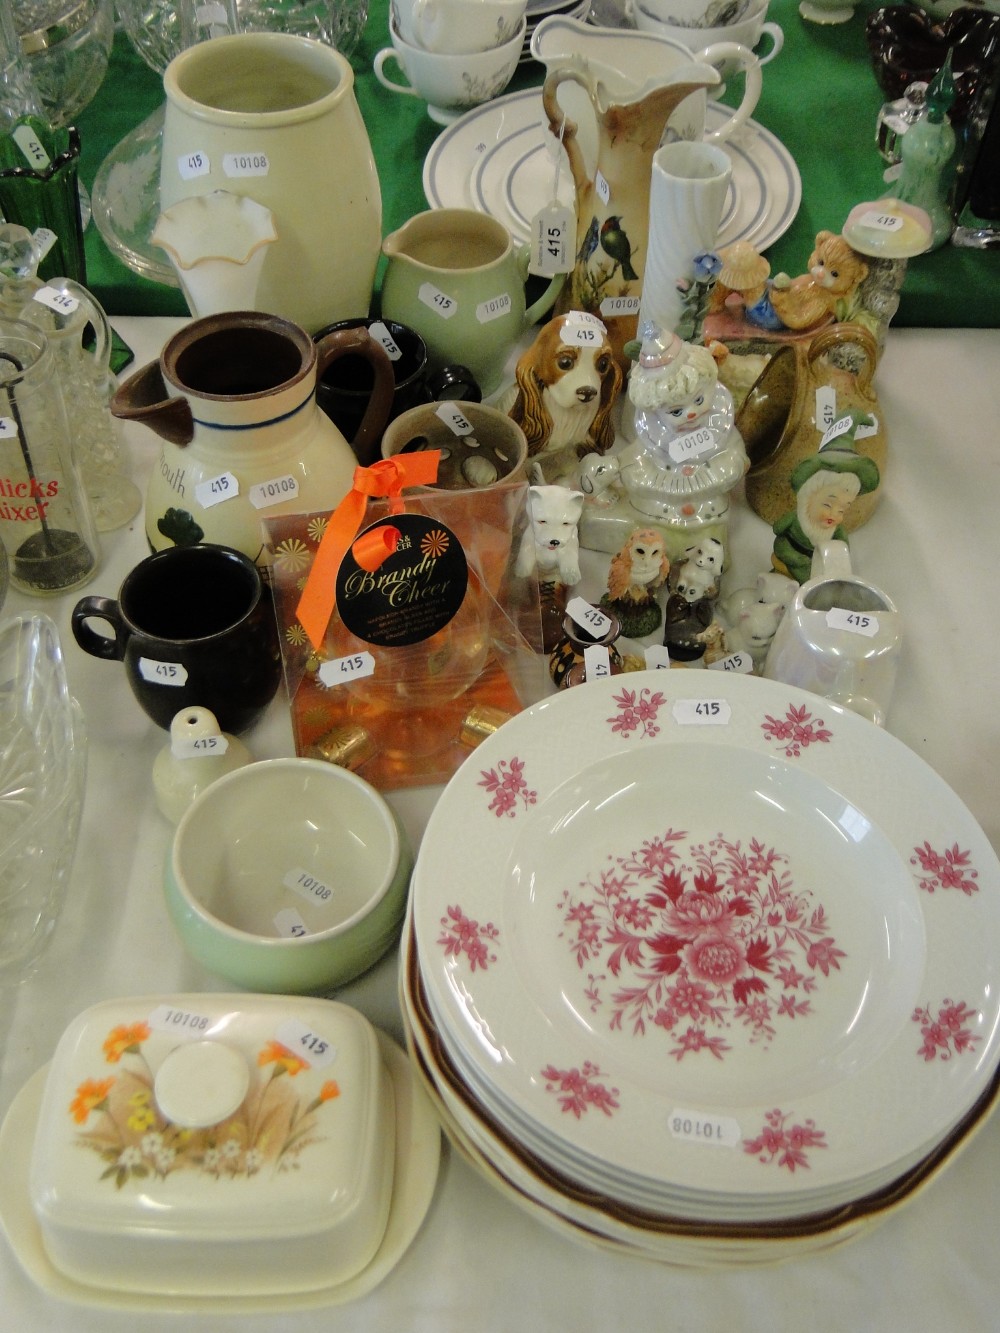 Ornaments, jugs, decorative plates, etc.